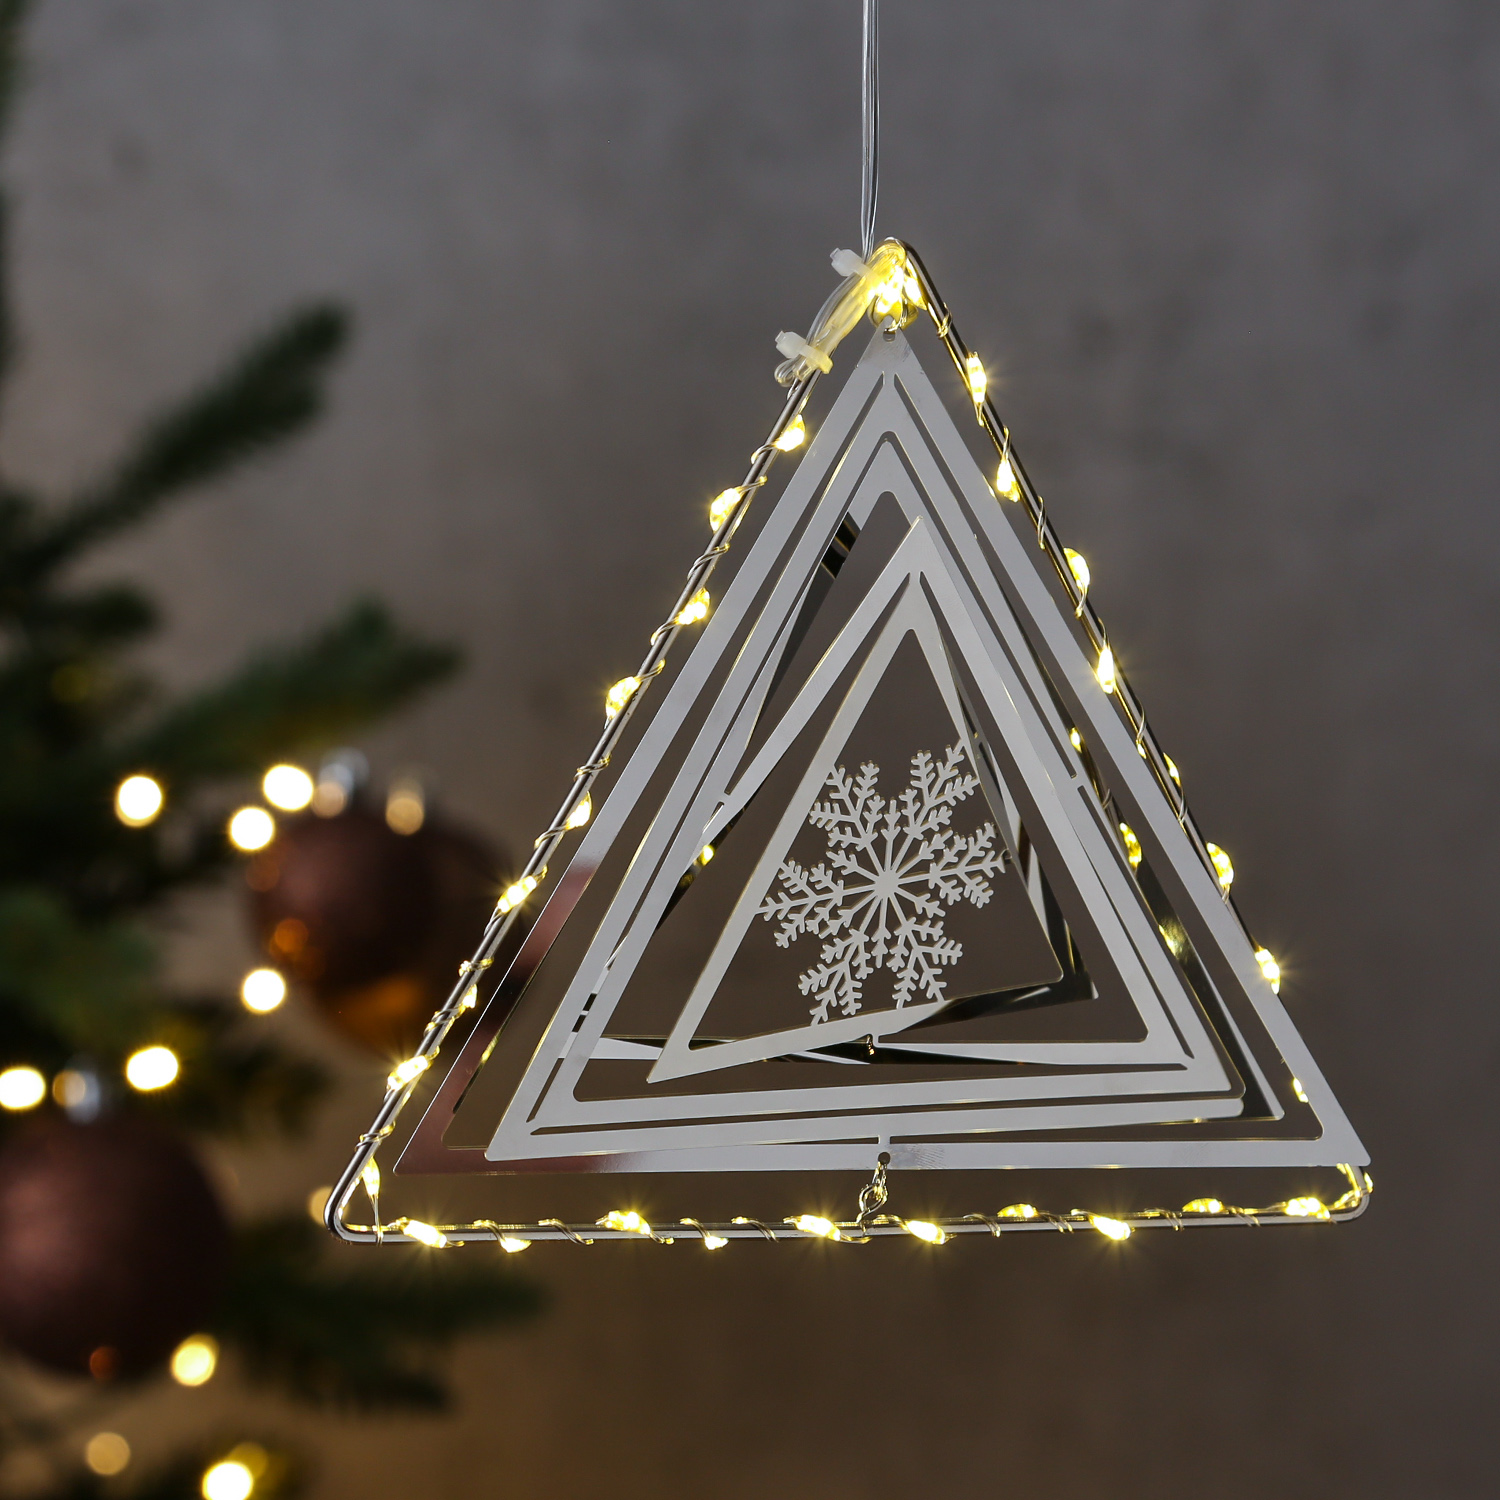 LED Dreieck mit Schneeflocke - 3D Dekohänger - 30 warmweiße LED